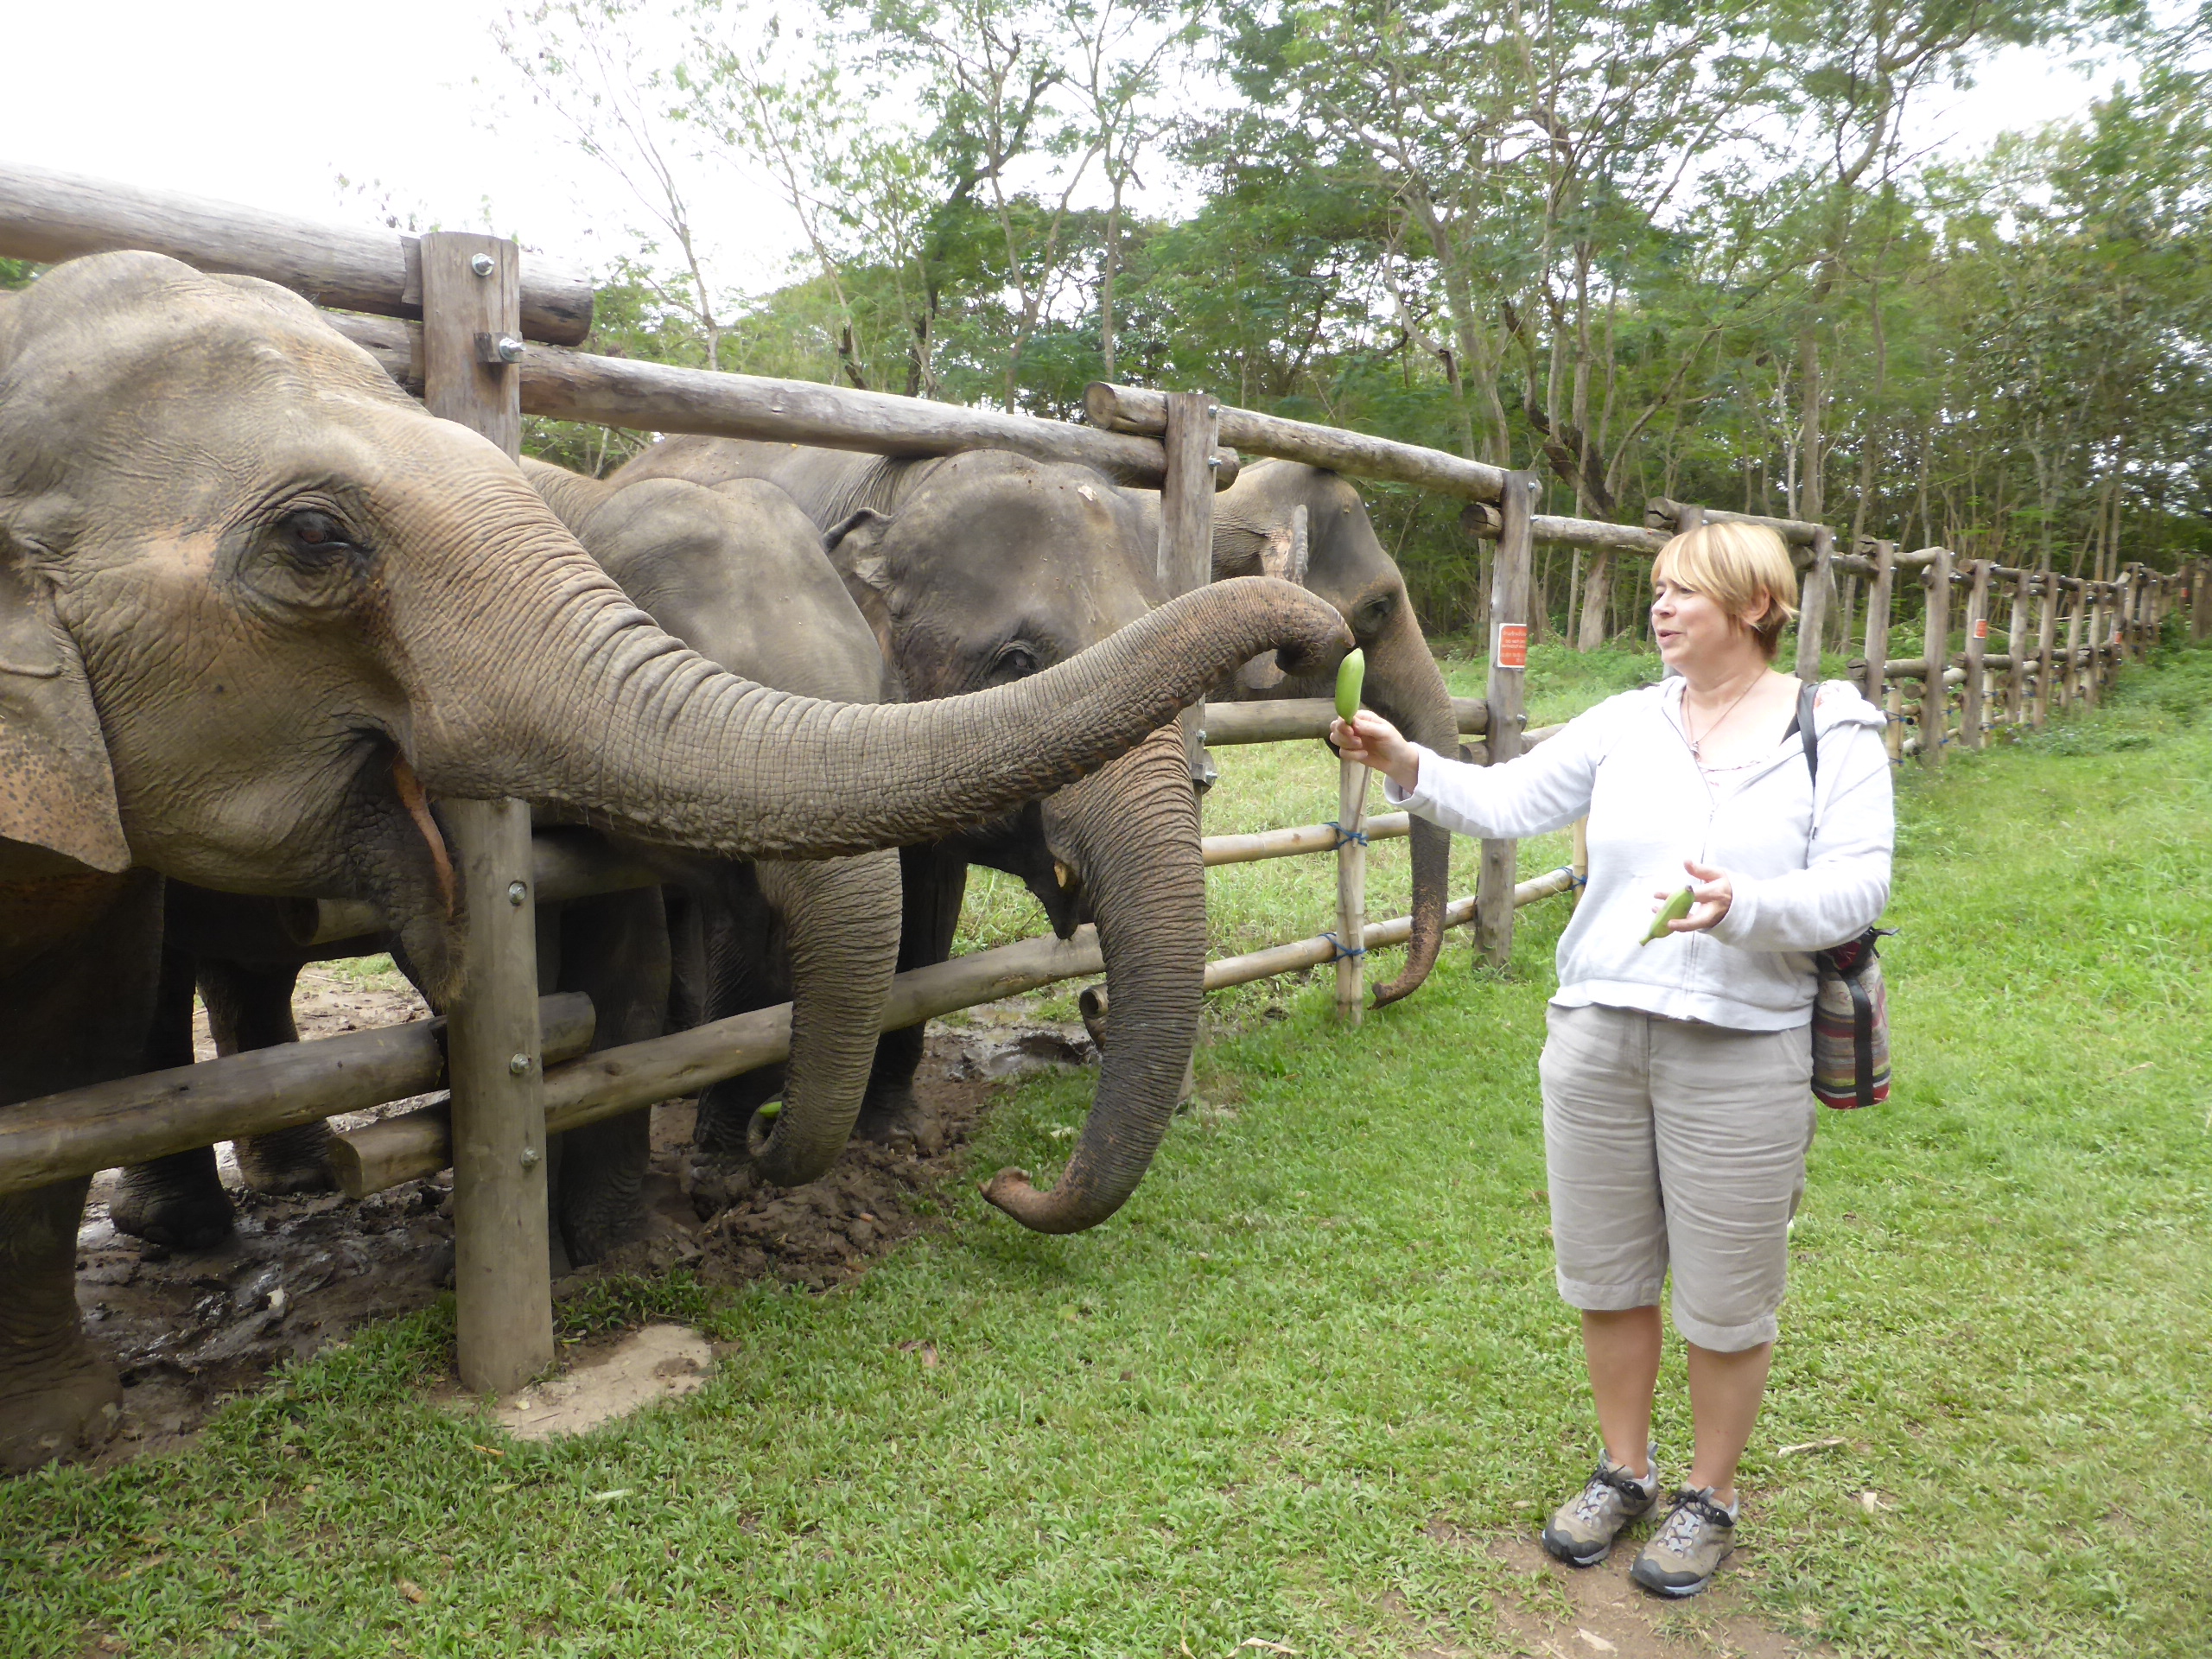 McGrouther feeding the elephants at Elephant Valley Thailand sanctuary.